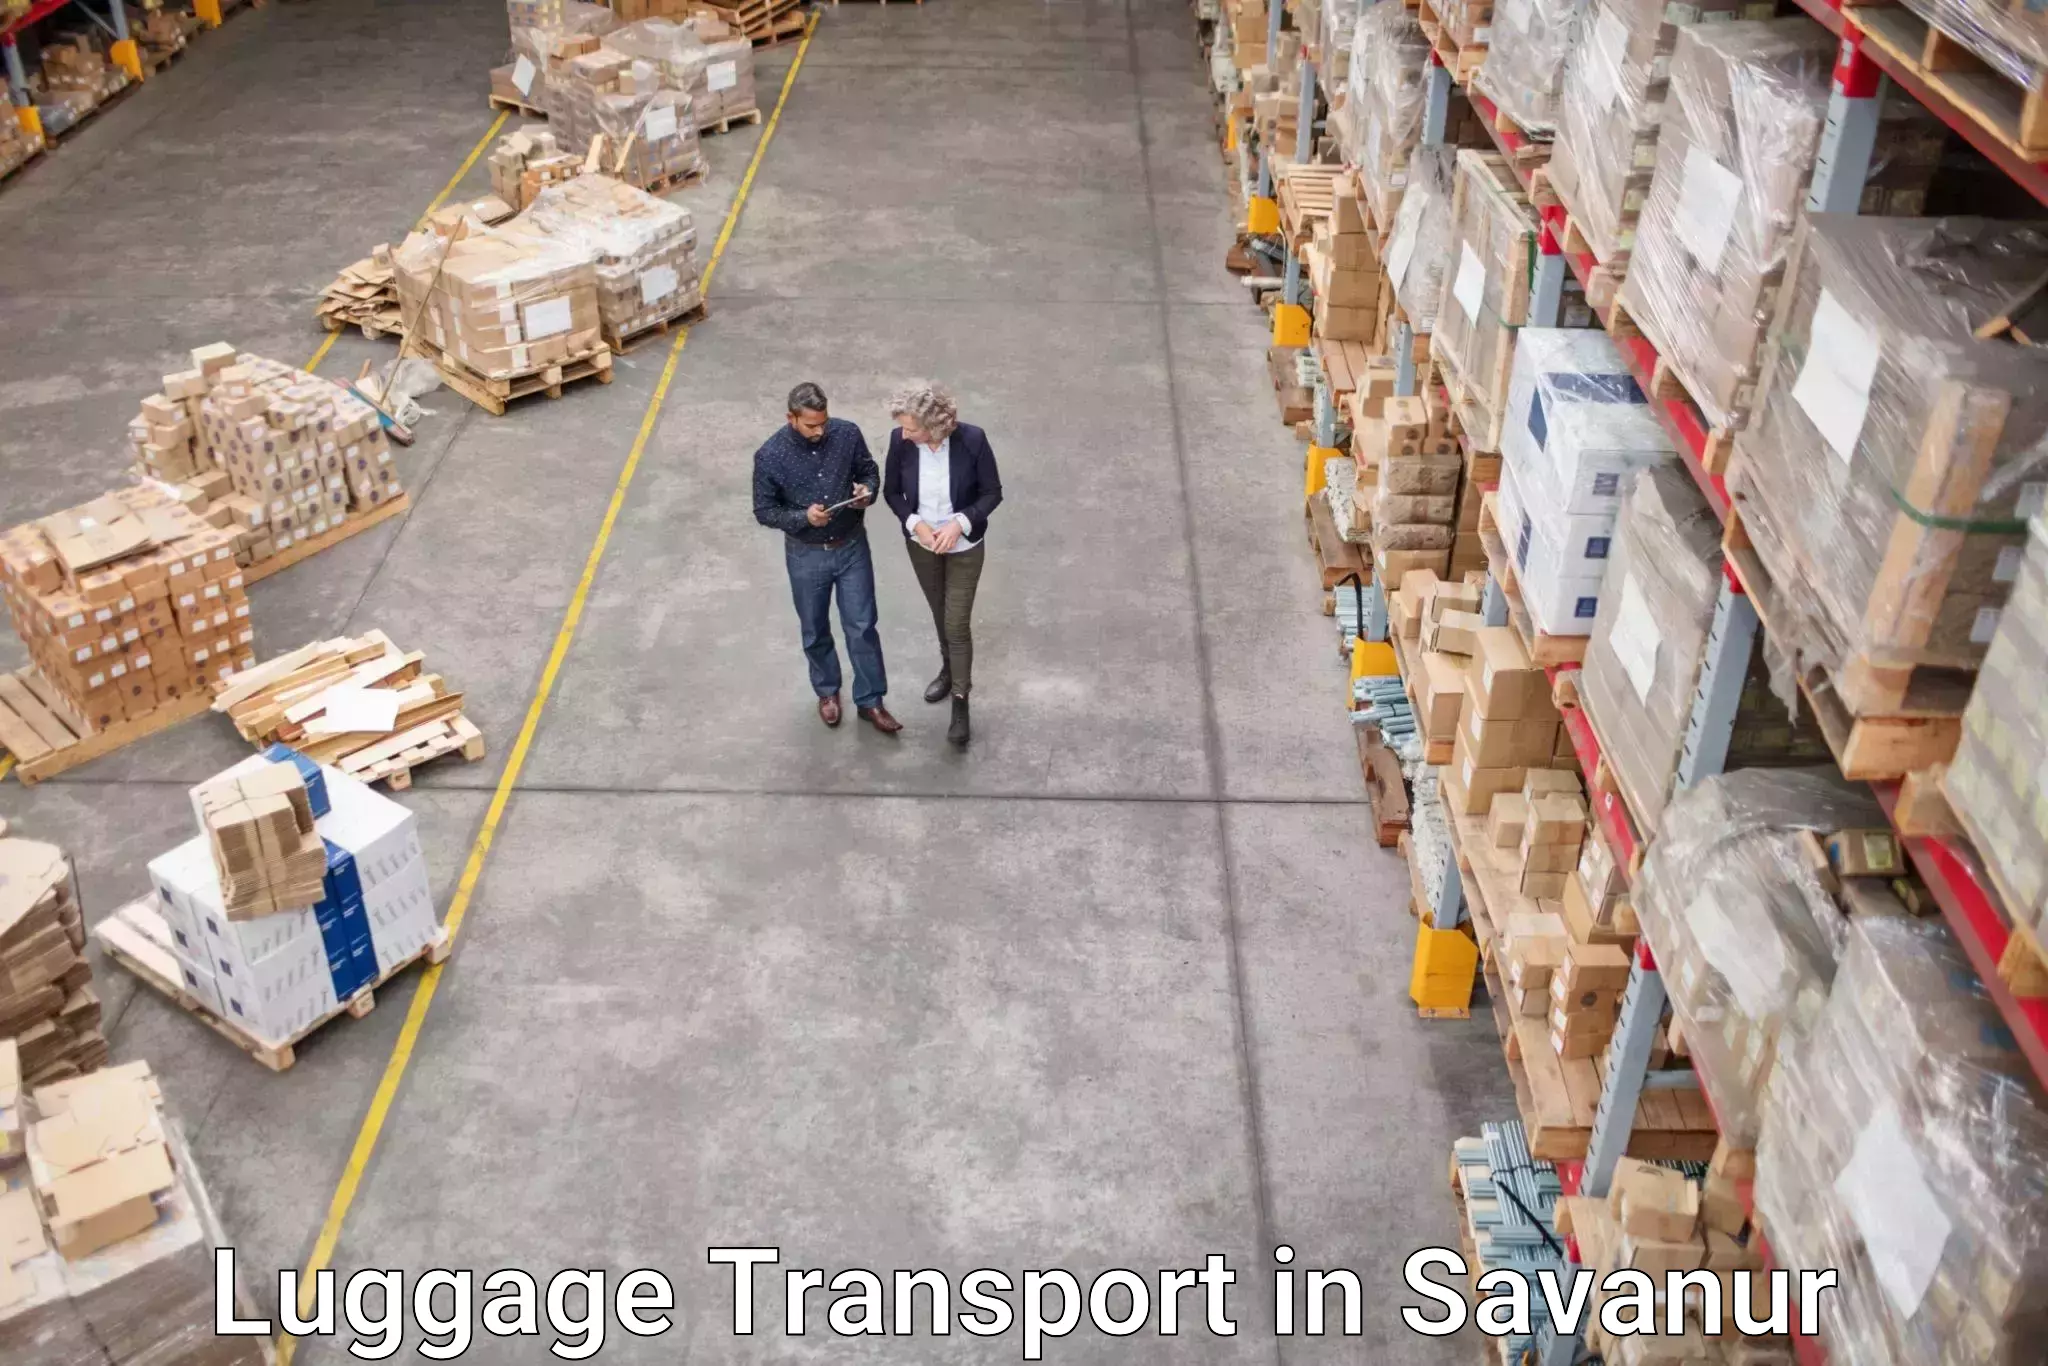 Baggage transport services in Savanur